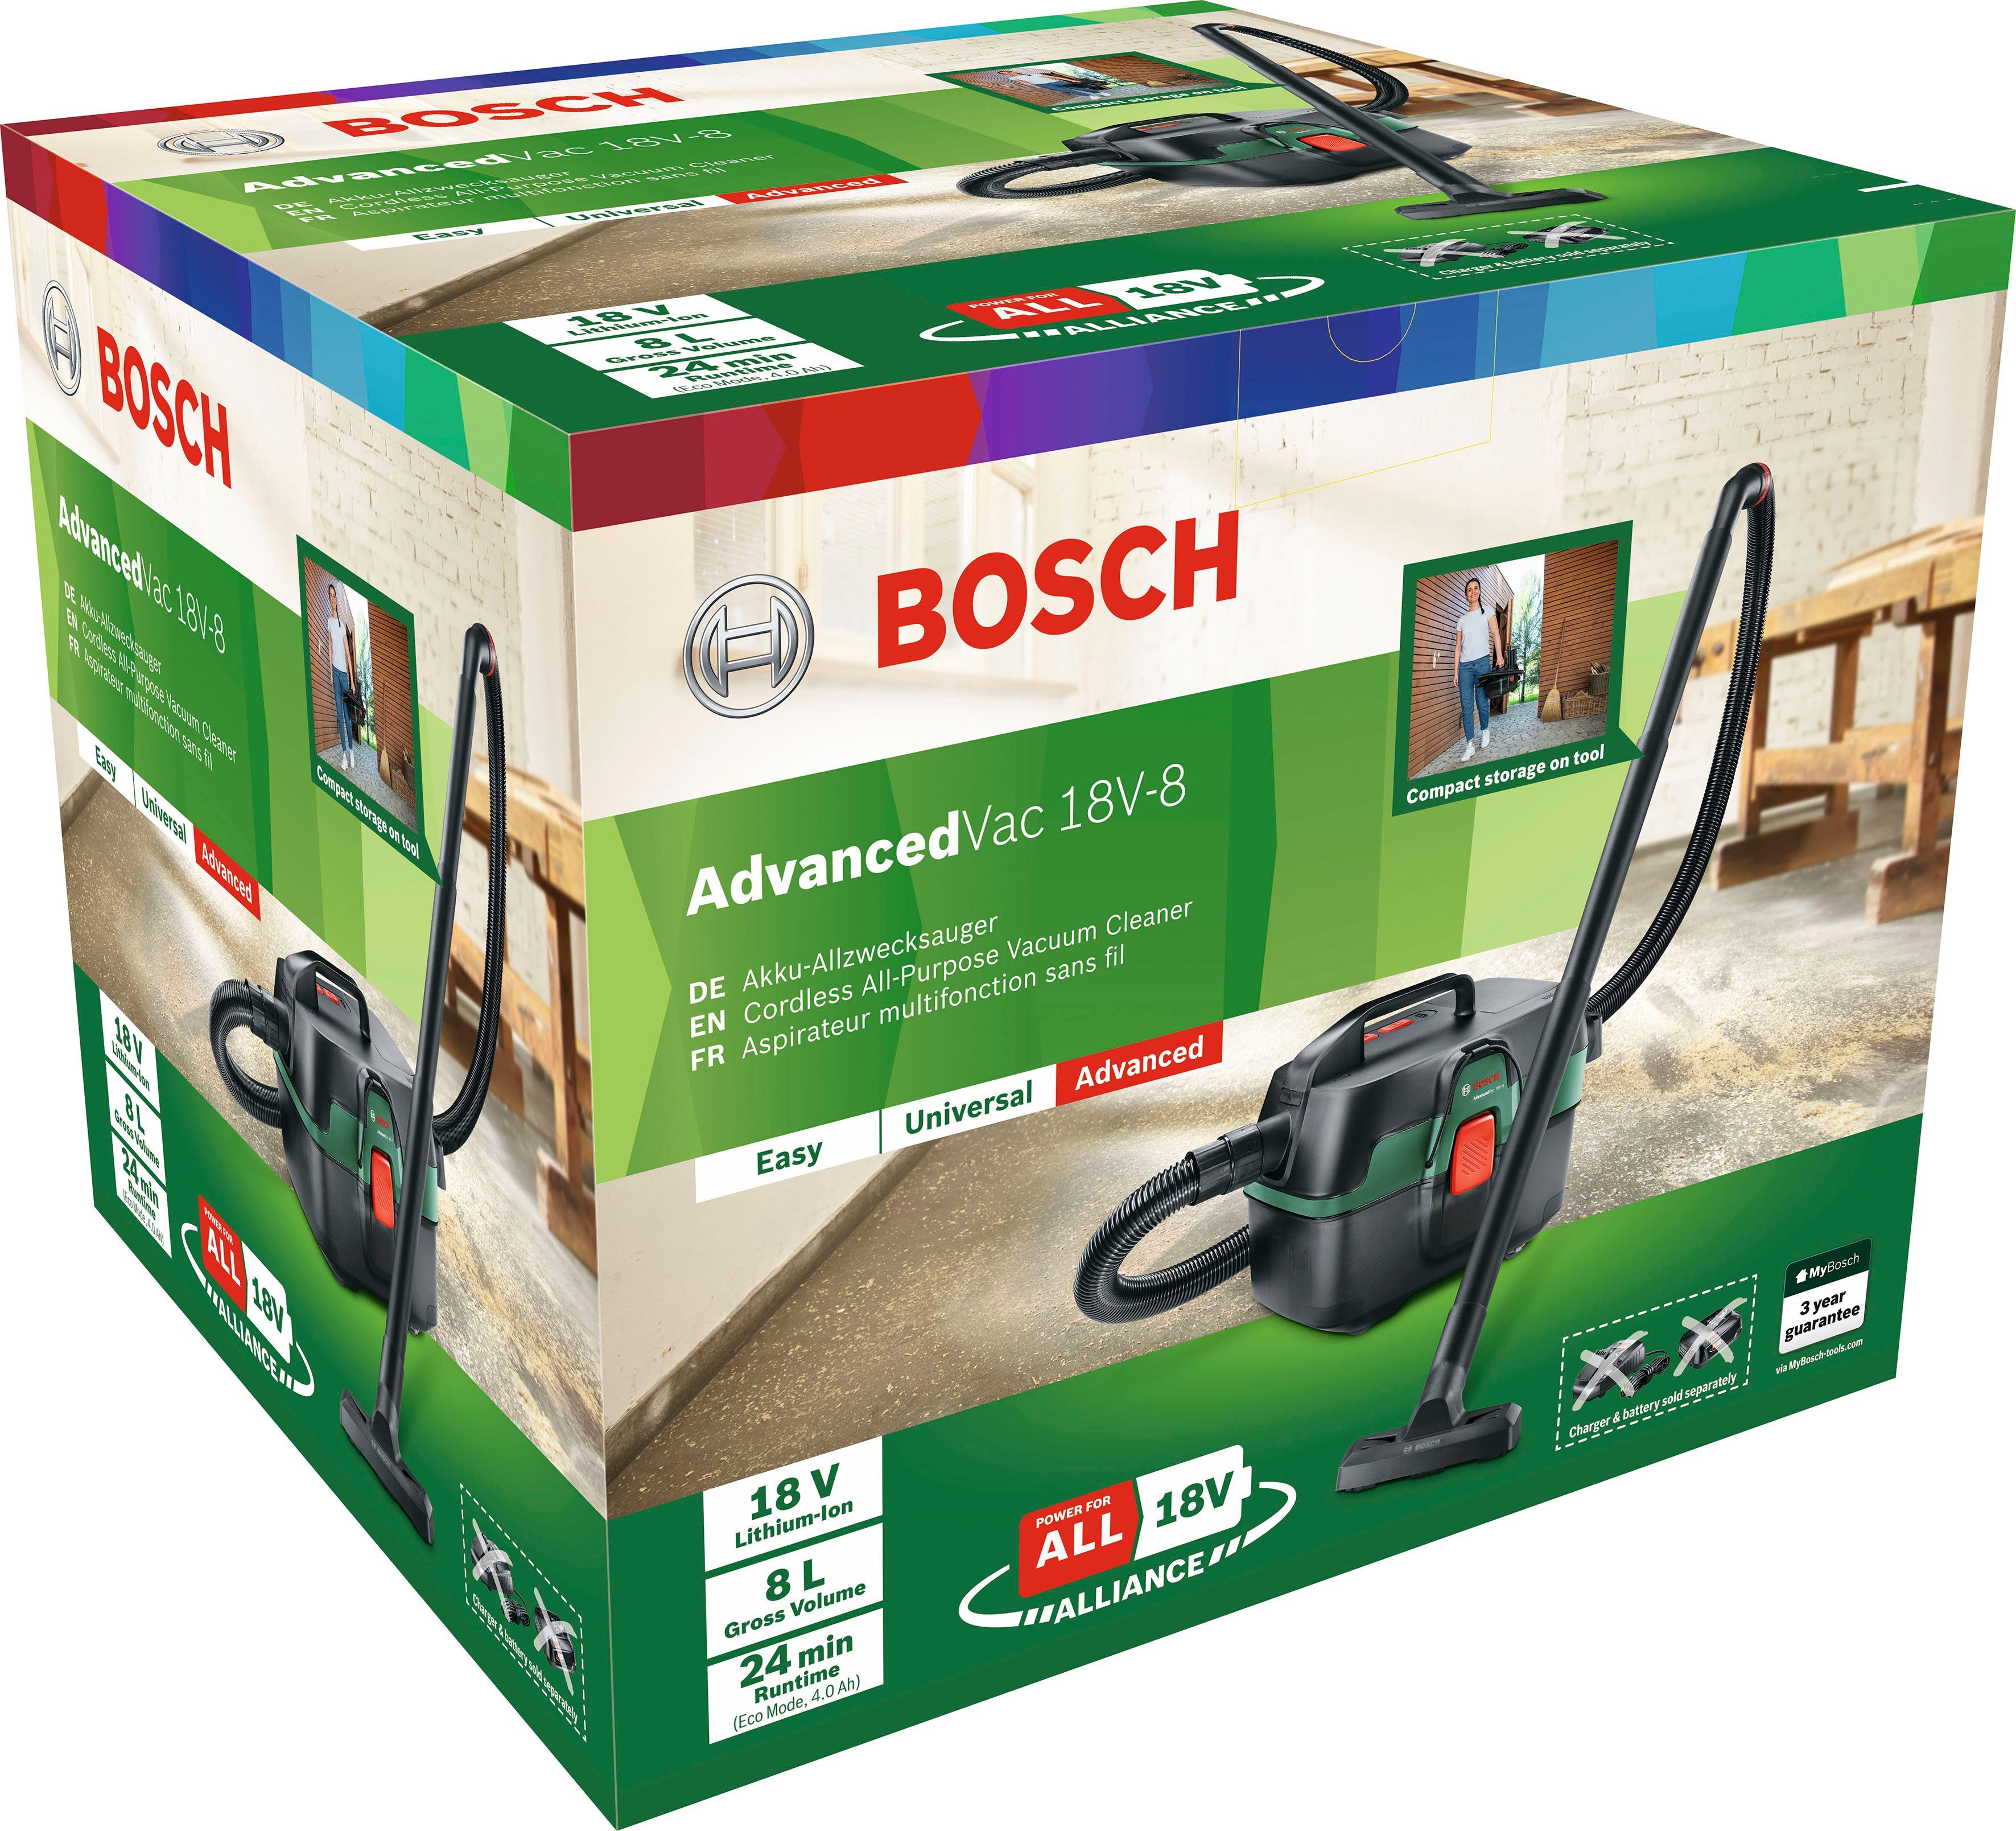 & Ladegerät AdvancedVac Akku Home mit 18V-8, Bosch und ohne Garden Beutel, Nass-Trocken-Akkusauger